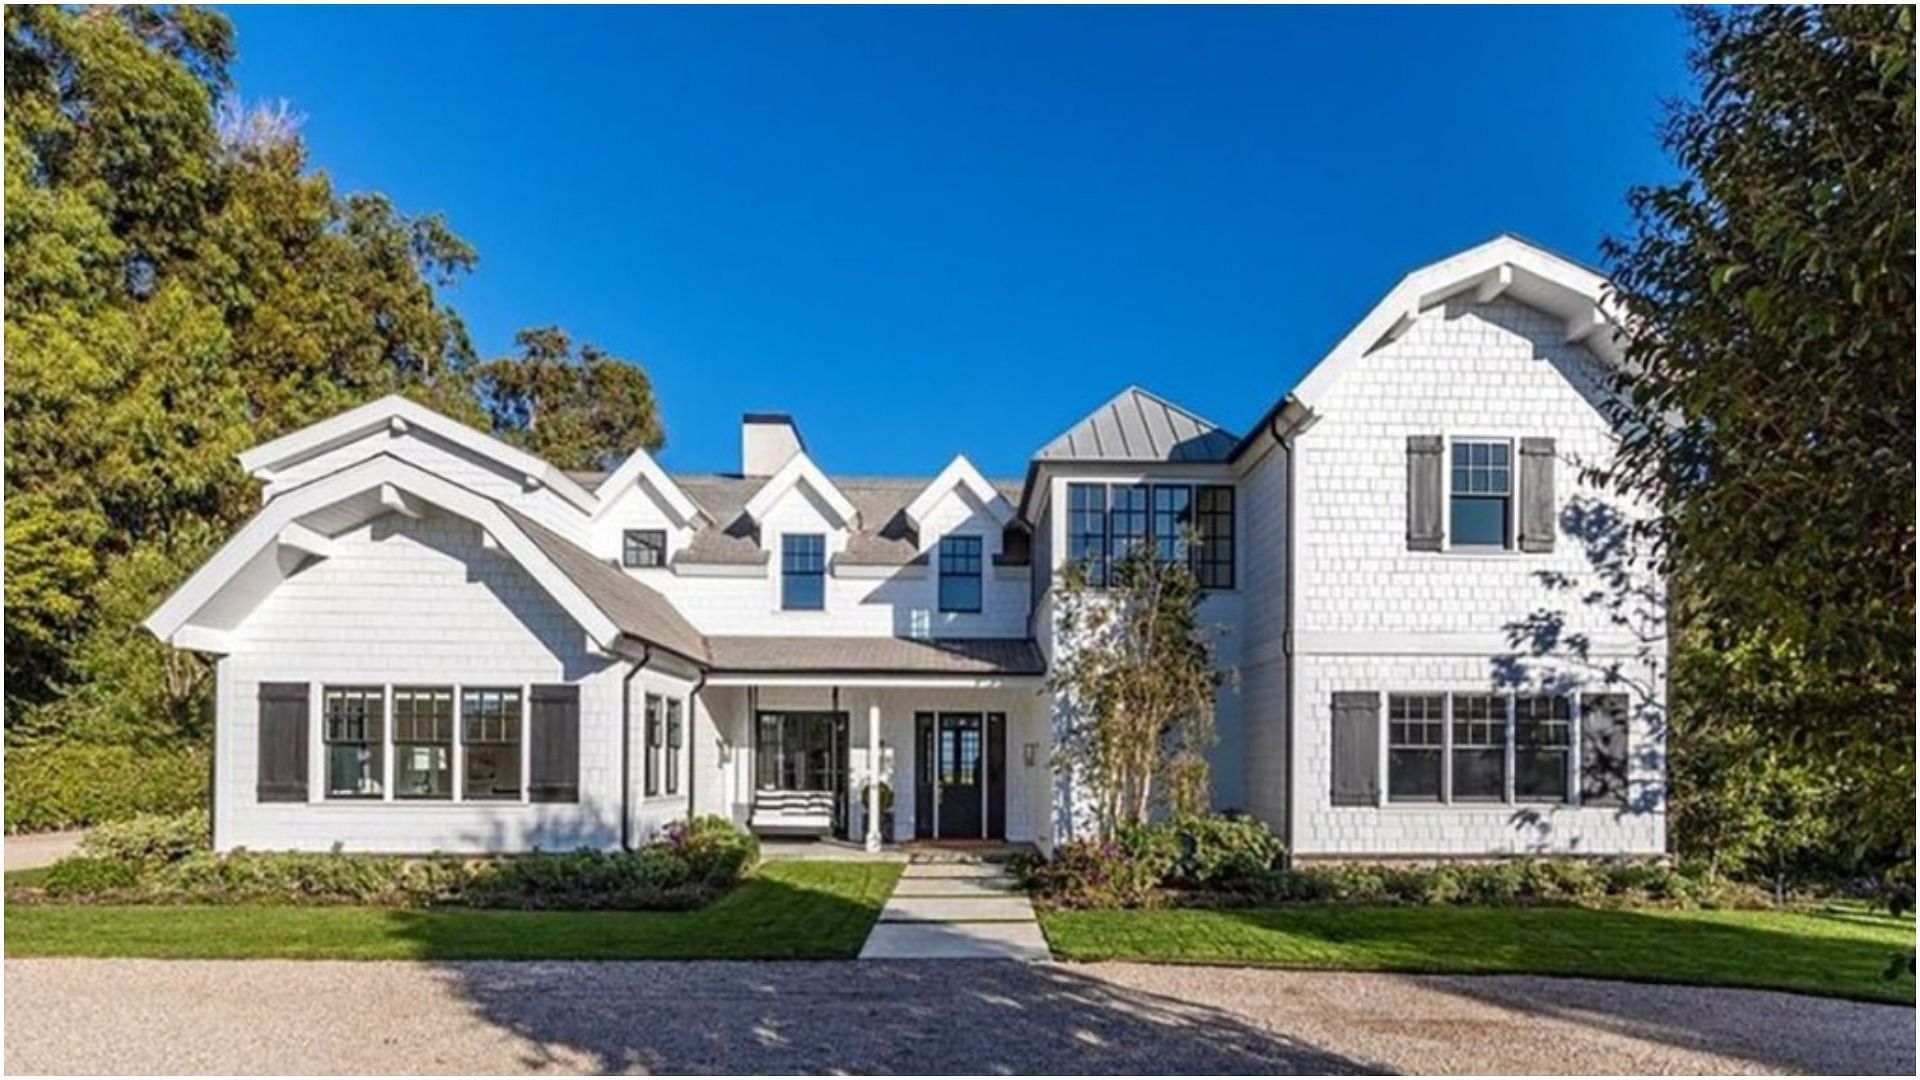 Chris Martin sold the house for $14.4 million (Image via Dirt News)